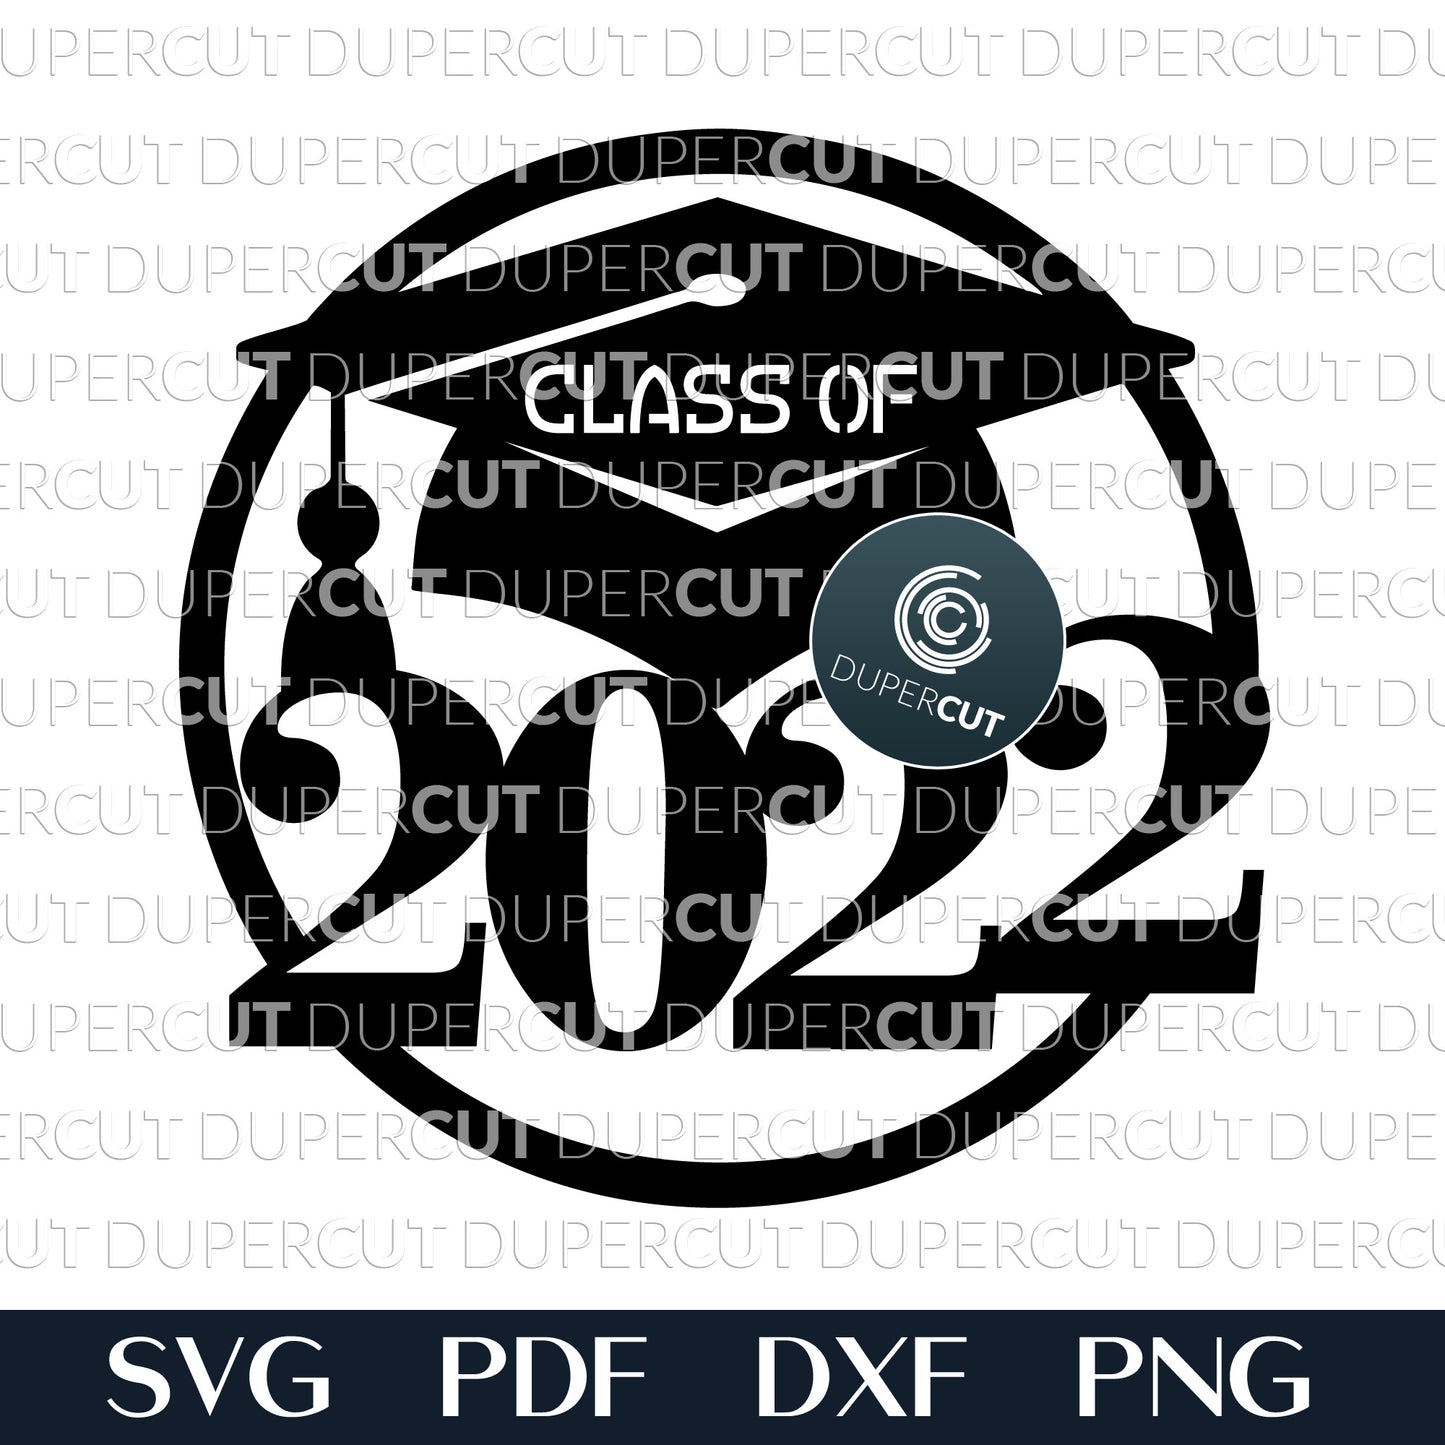 Congrats grad - Class of 2022 - Graduation decoration - SVG PNG DXF cutting files by DuperCut for Glowforge, Cricut, Silhouette Cameo, CNC plasma machines